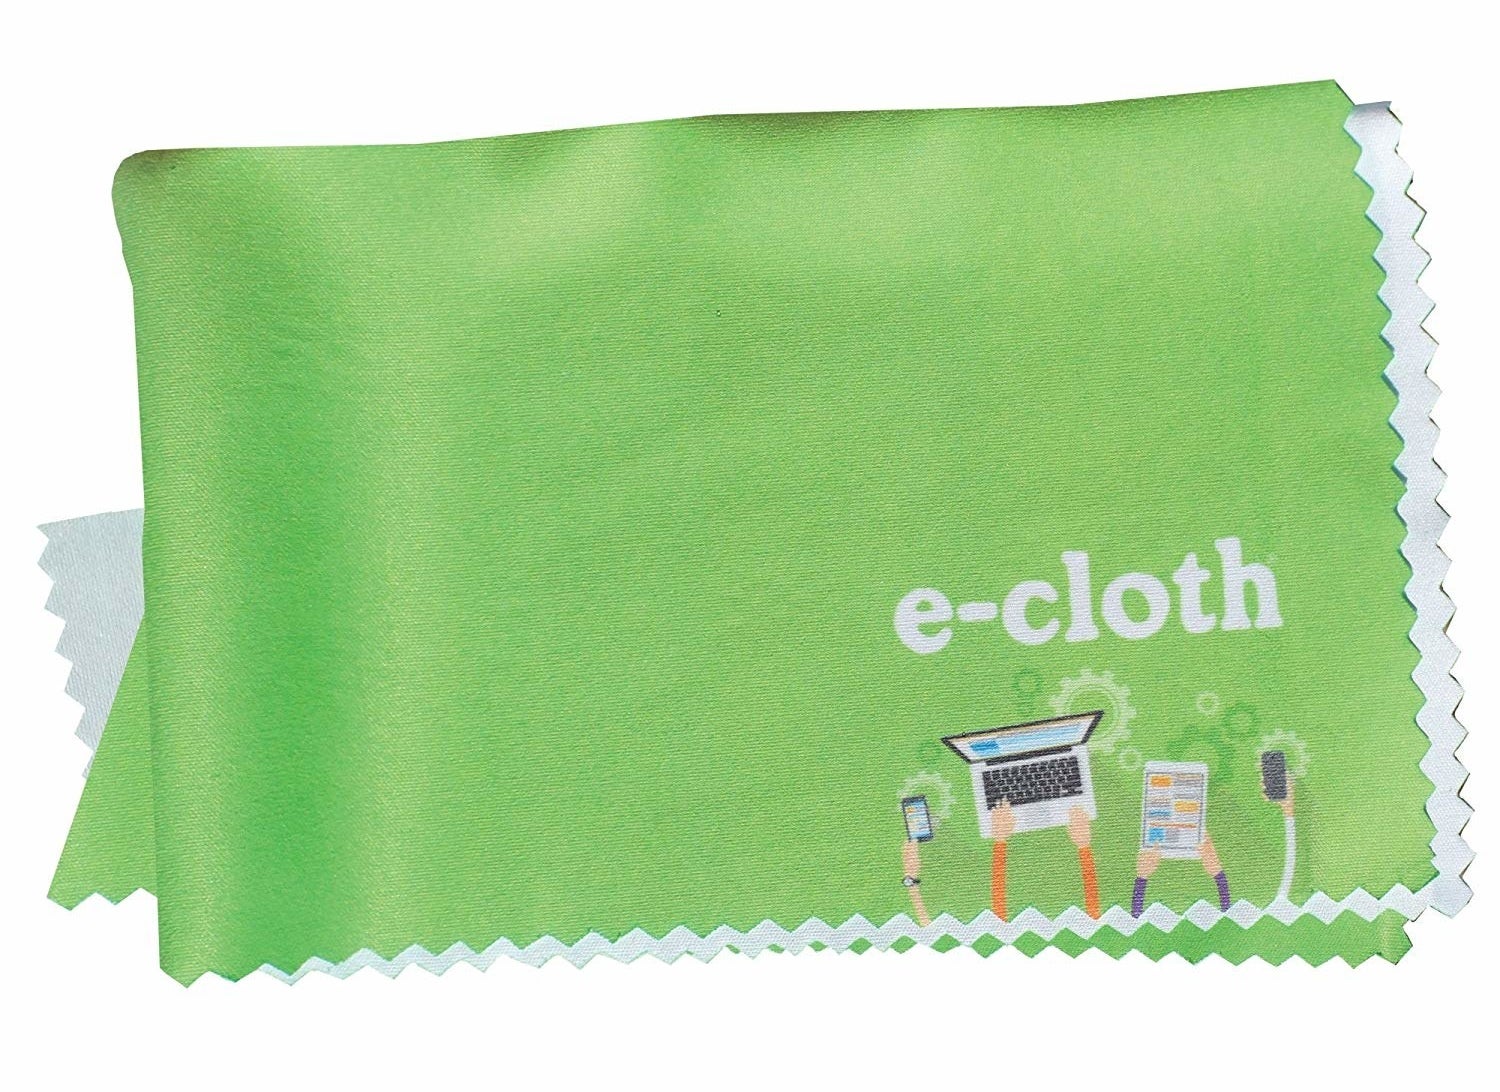 a green e-cloth